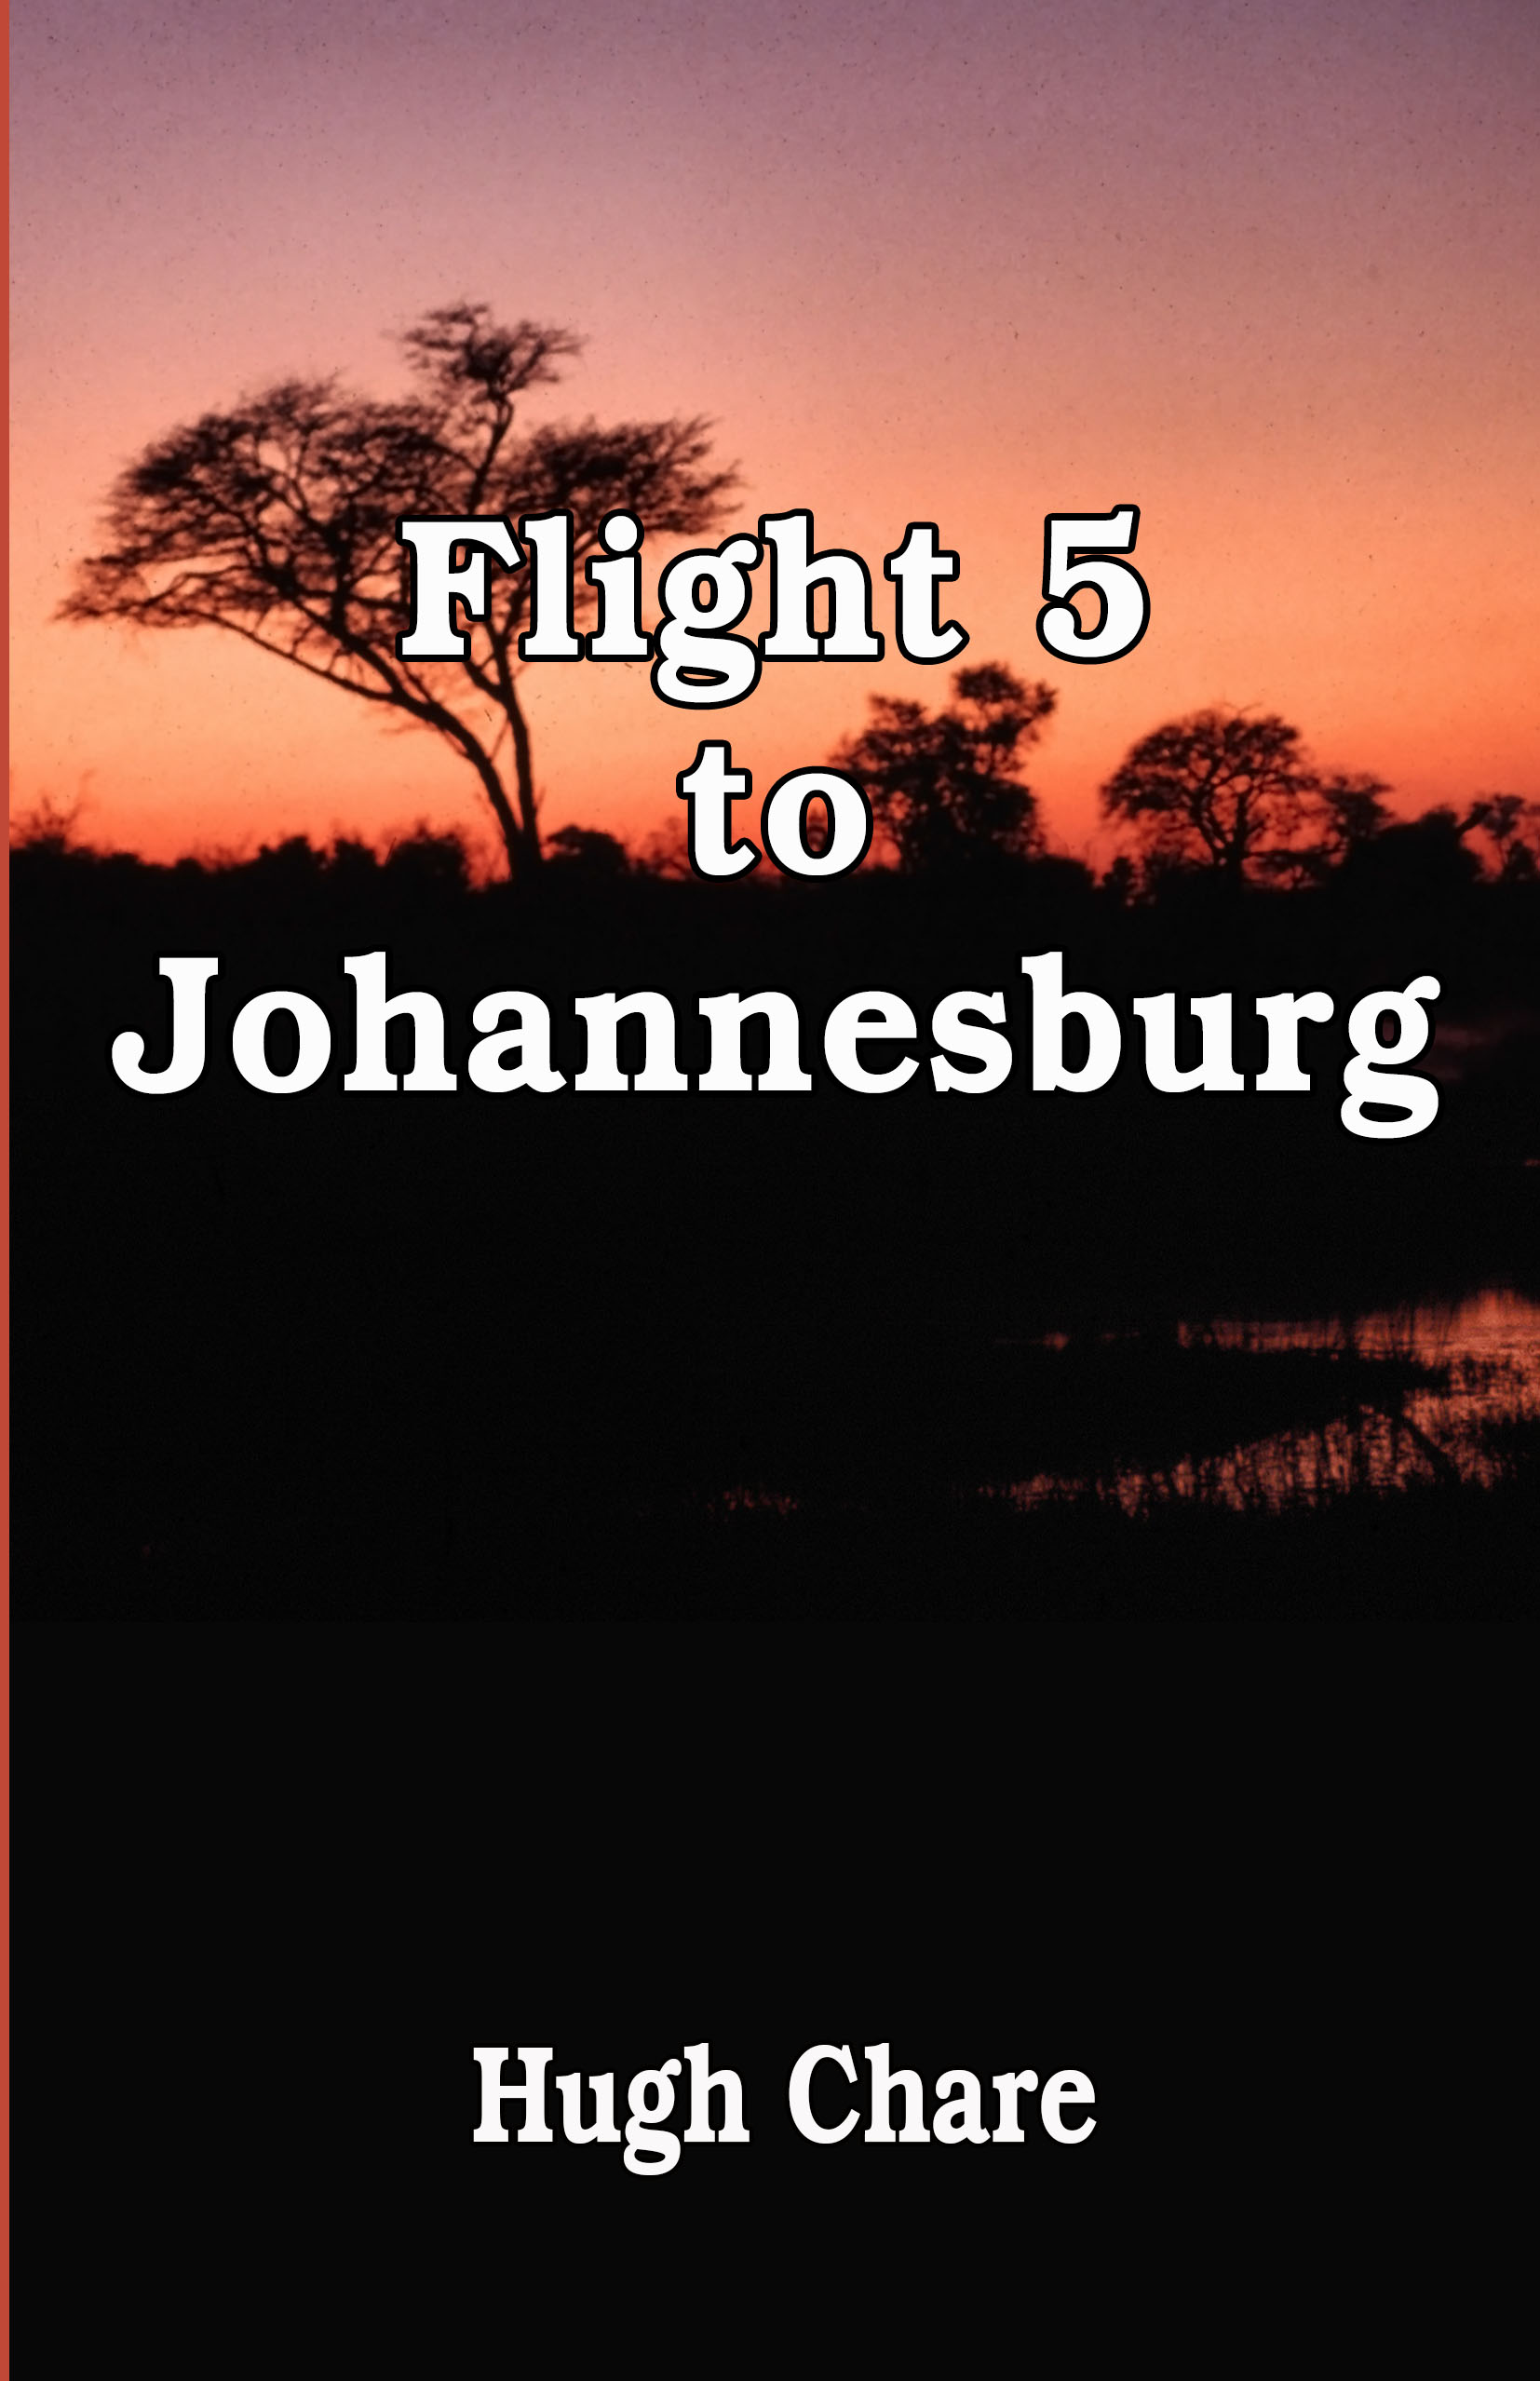 Flight 5 to Johannesburg